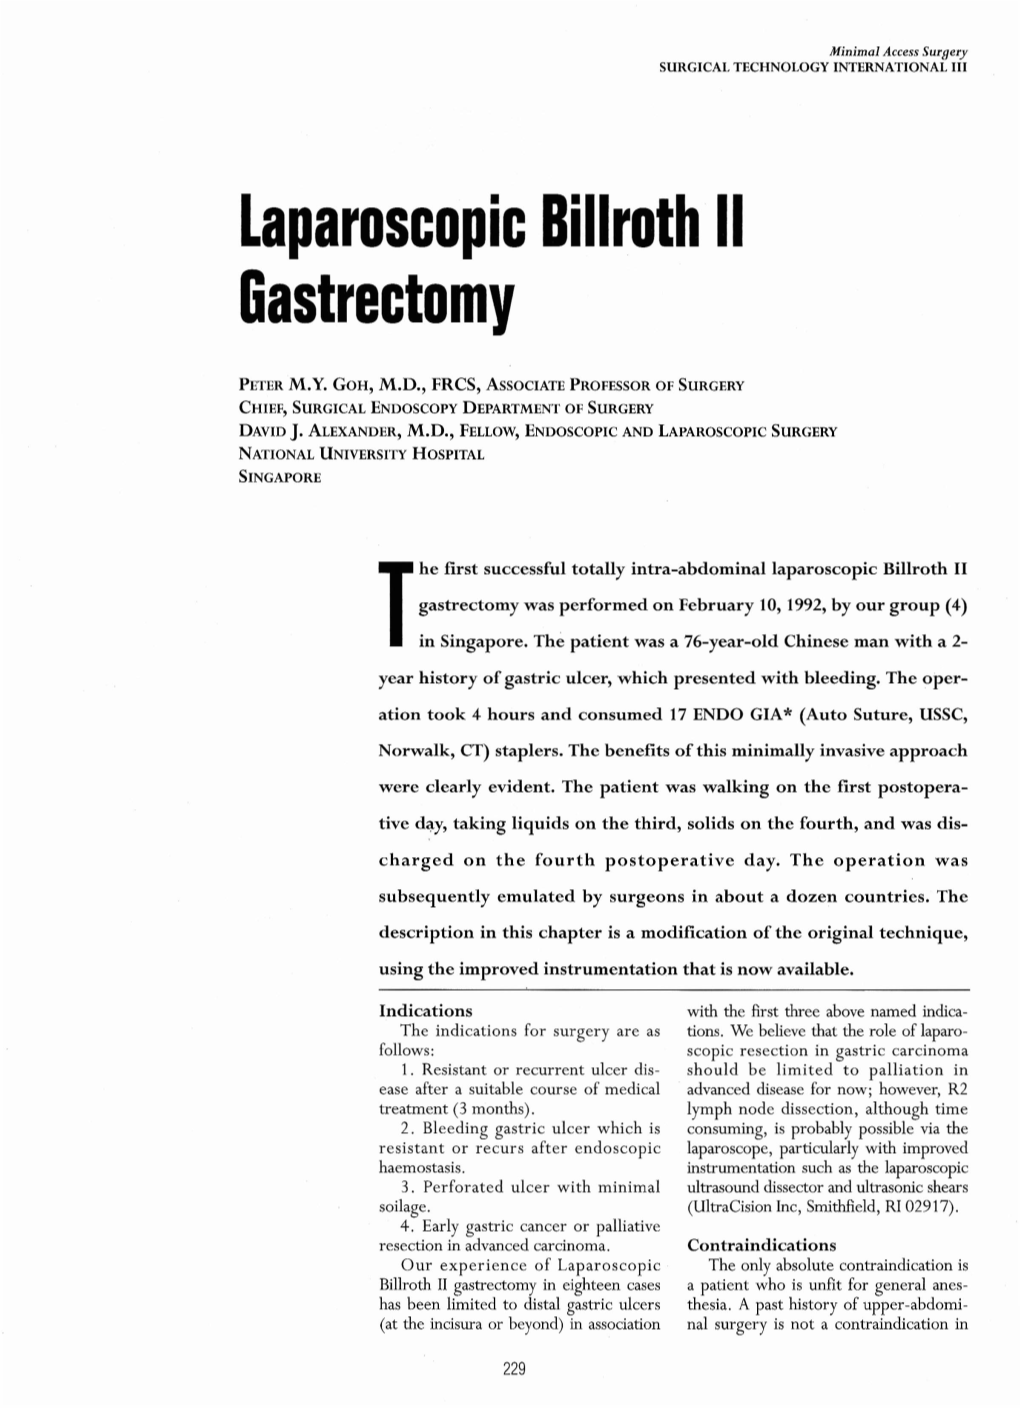 Laparoscopic Billroth II Gastrectomy